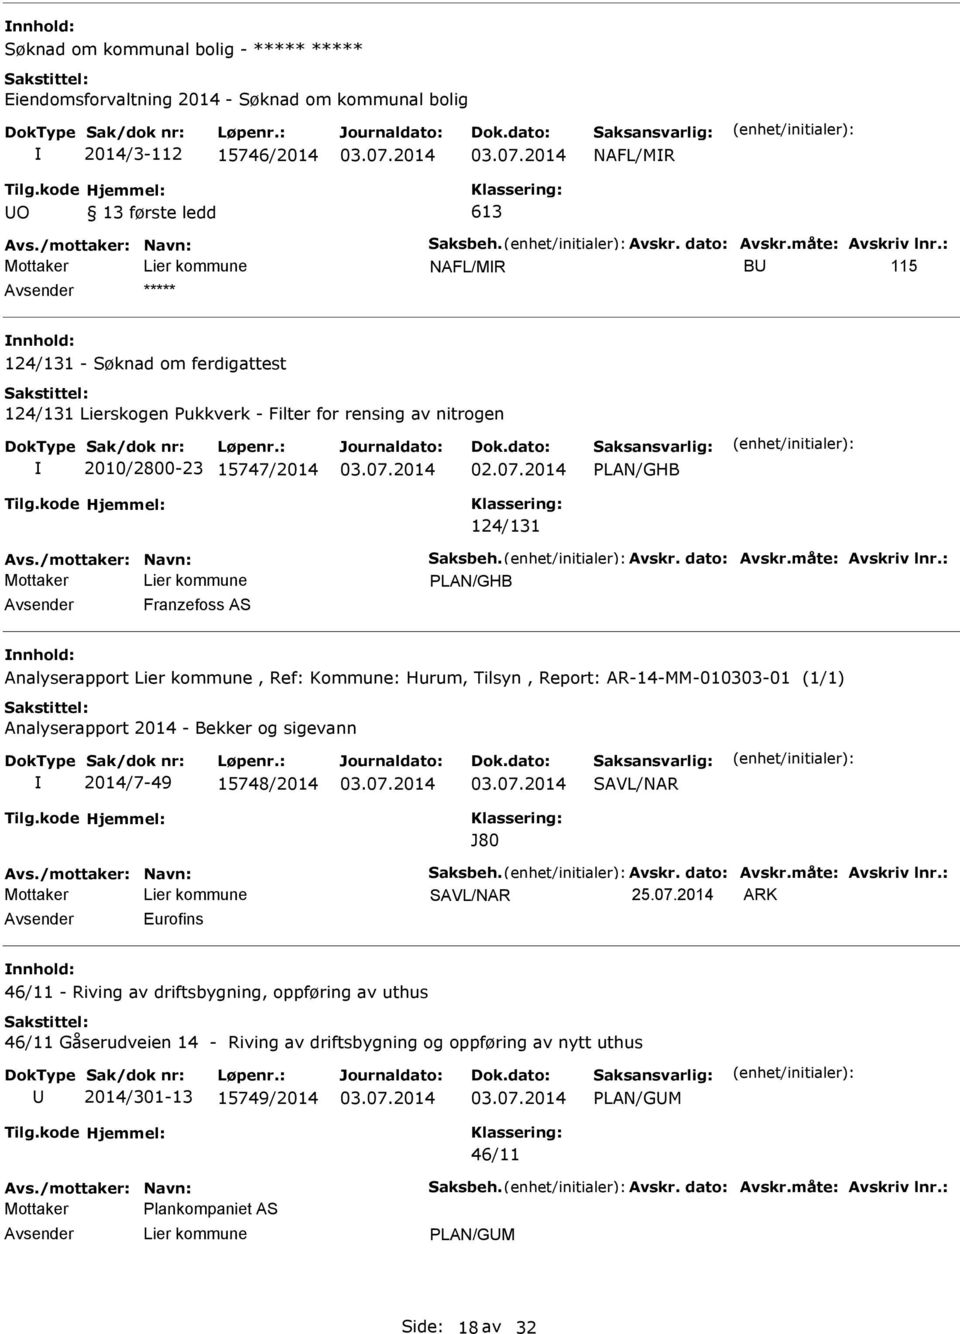 Tilsyn, Report: AR-14-MM-010303-01 (1/1) Analyserapport 2014 - Bekker og sigevann 2014/7-49 15748/2014 SAVL/NAR J80 SAVL/NAR 25.07.